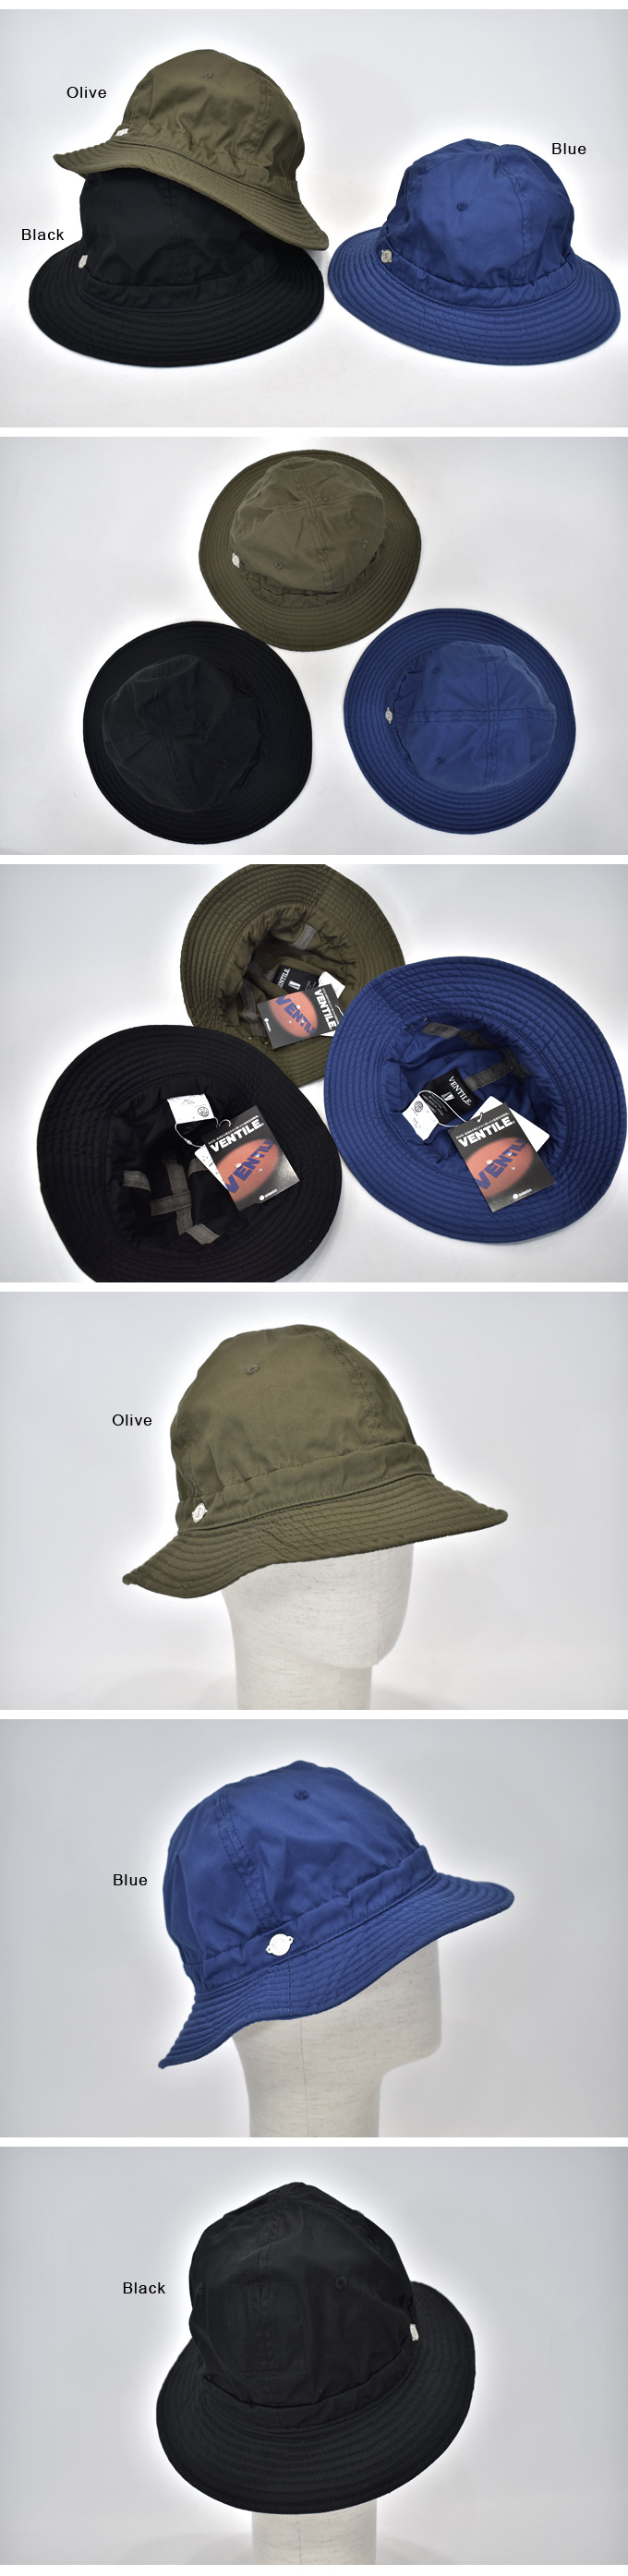 DECHO Hunter Hat (Ventile)